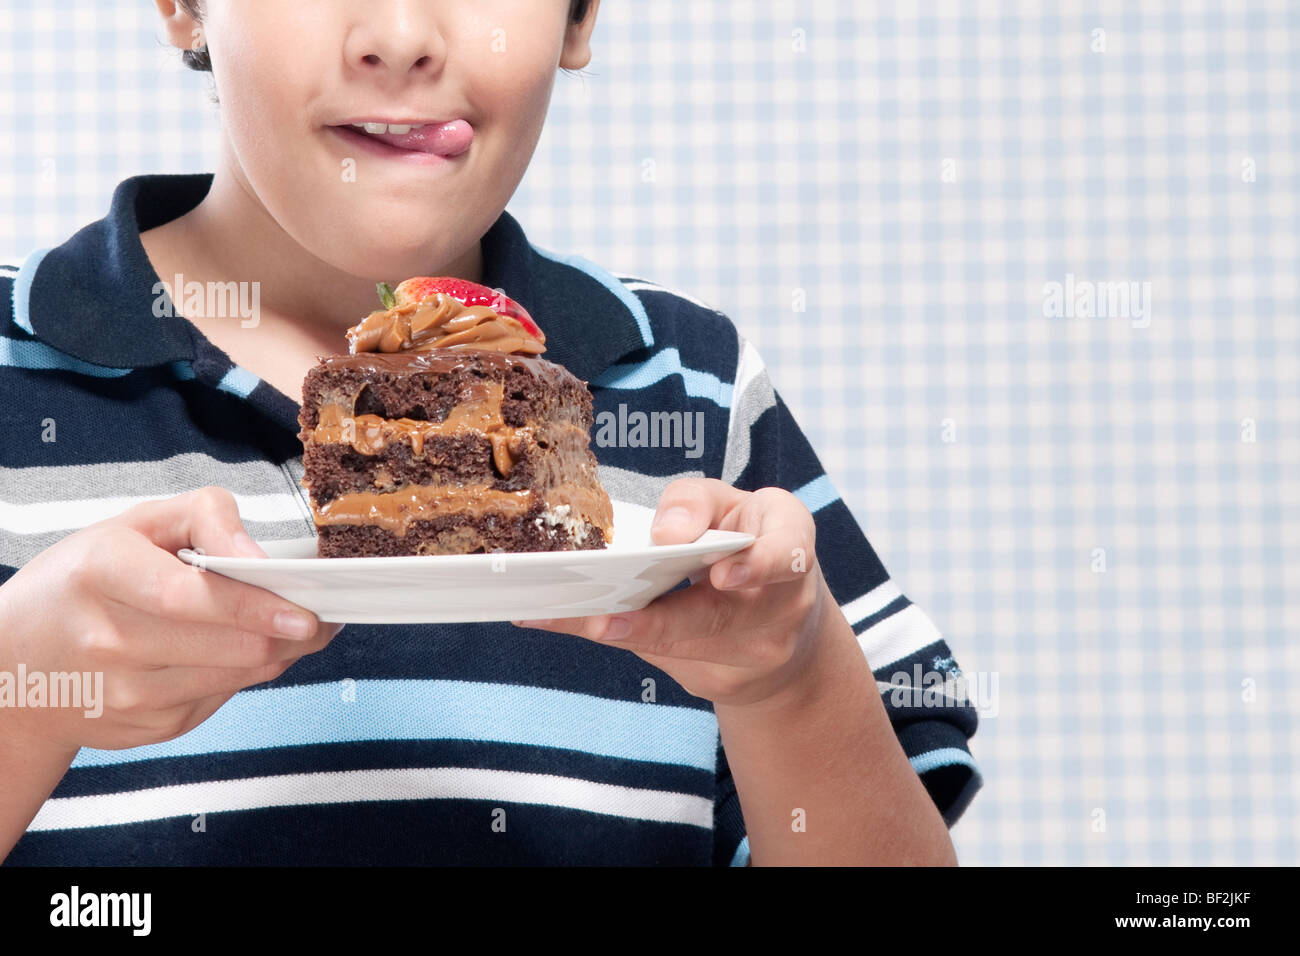 Junge hält einen Teller mit Schokolade Gebäck Stockfoto